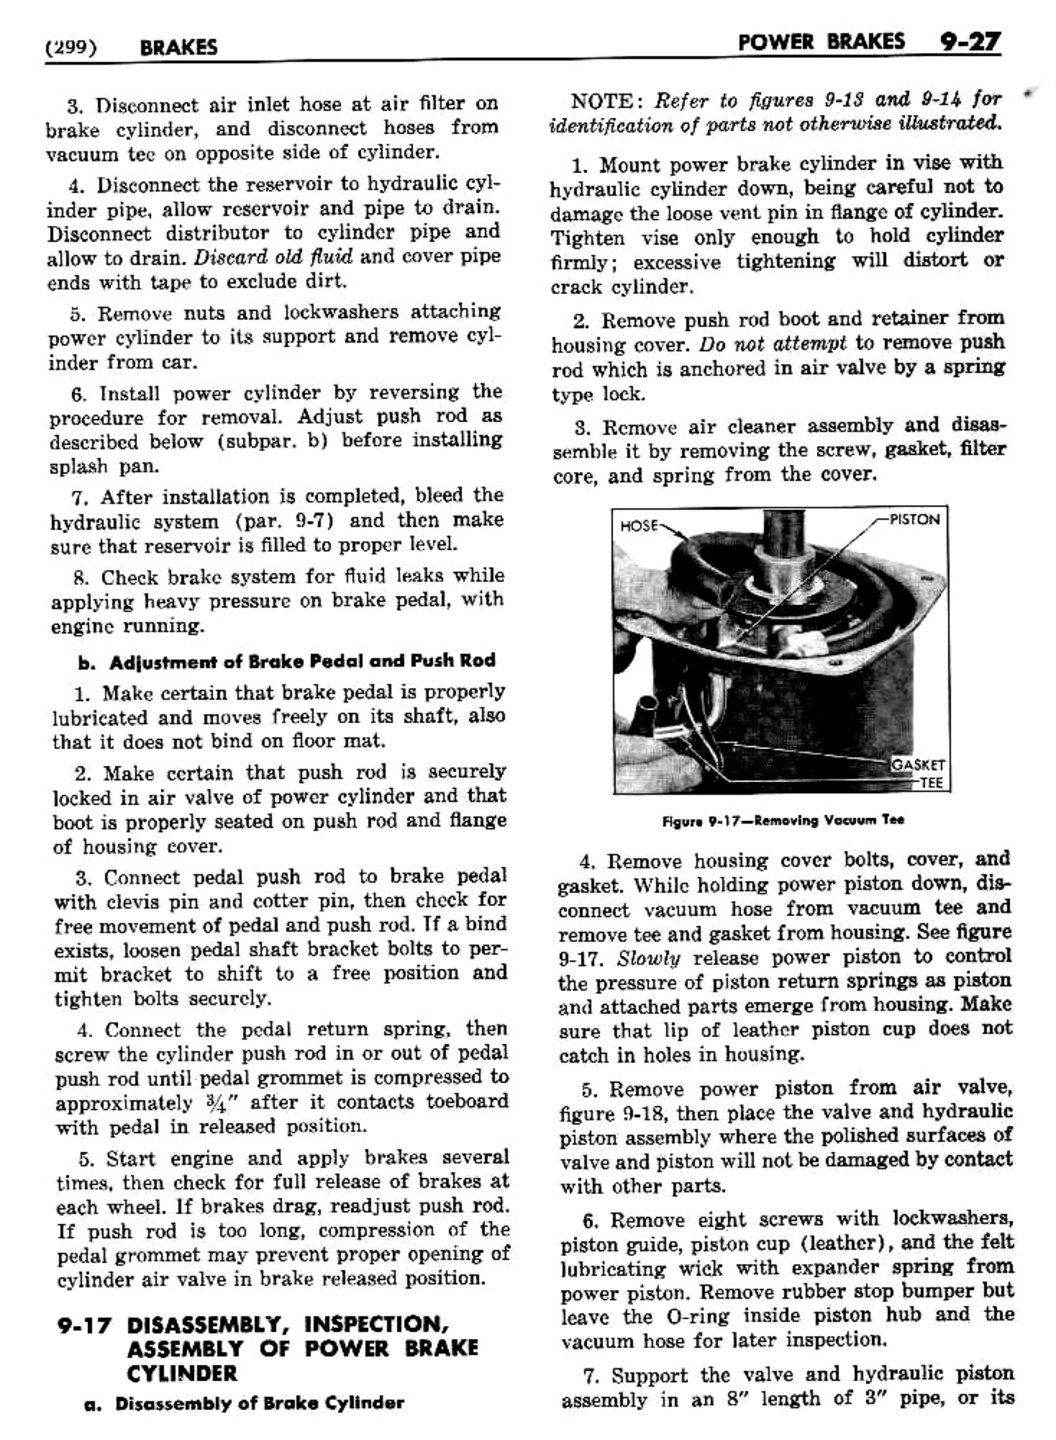 n_10 1955 Buick Shop Manual - Brakes-027-027.jpg